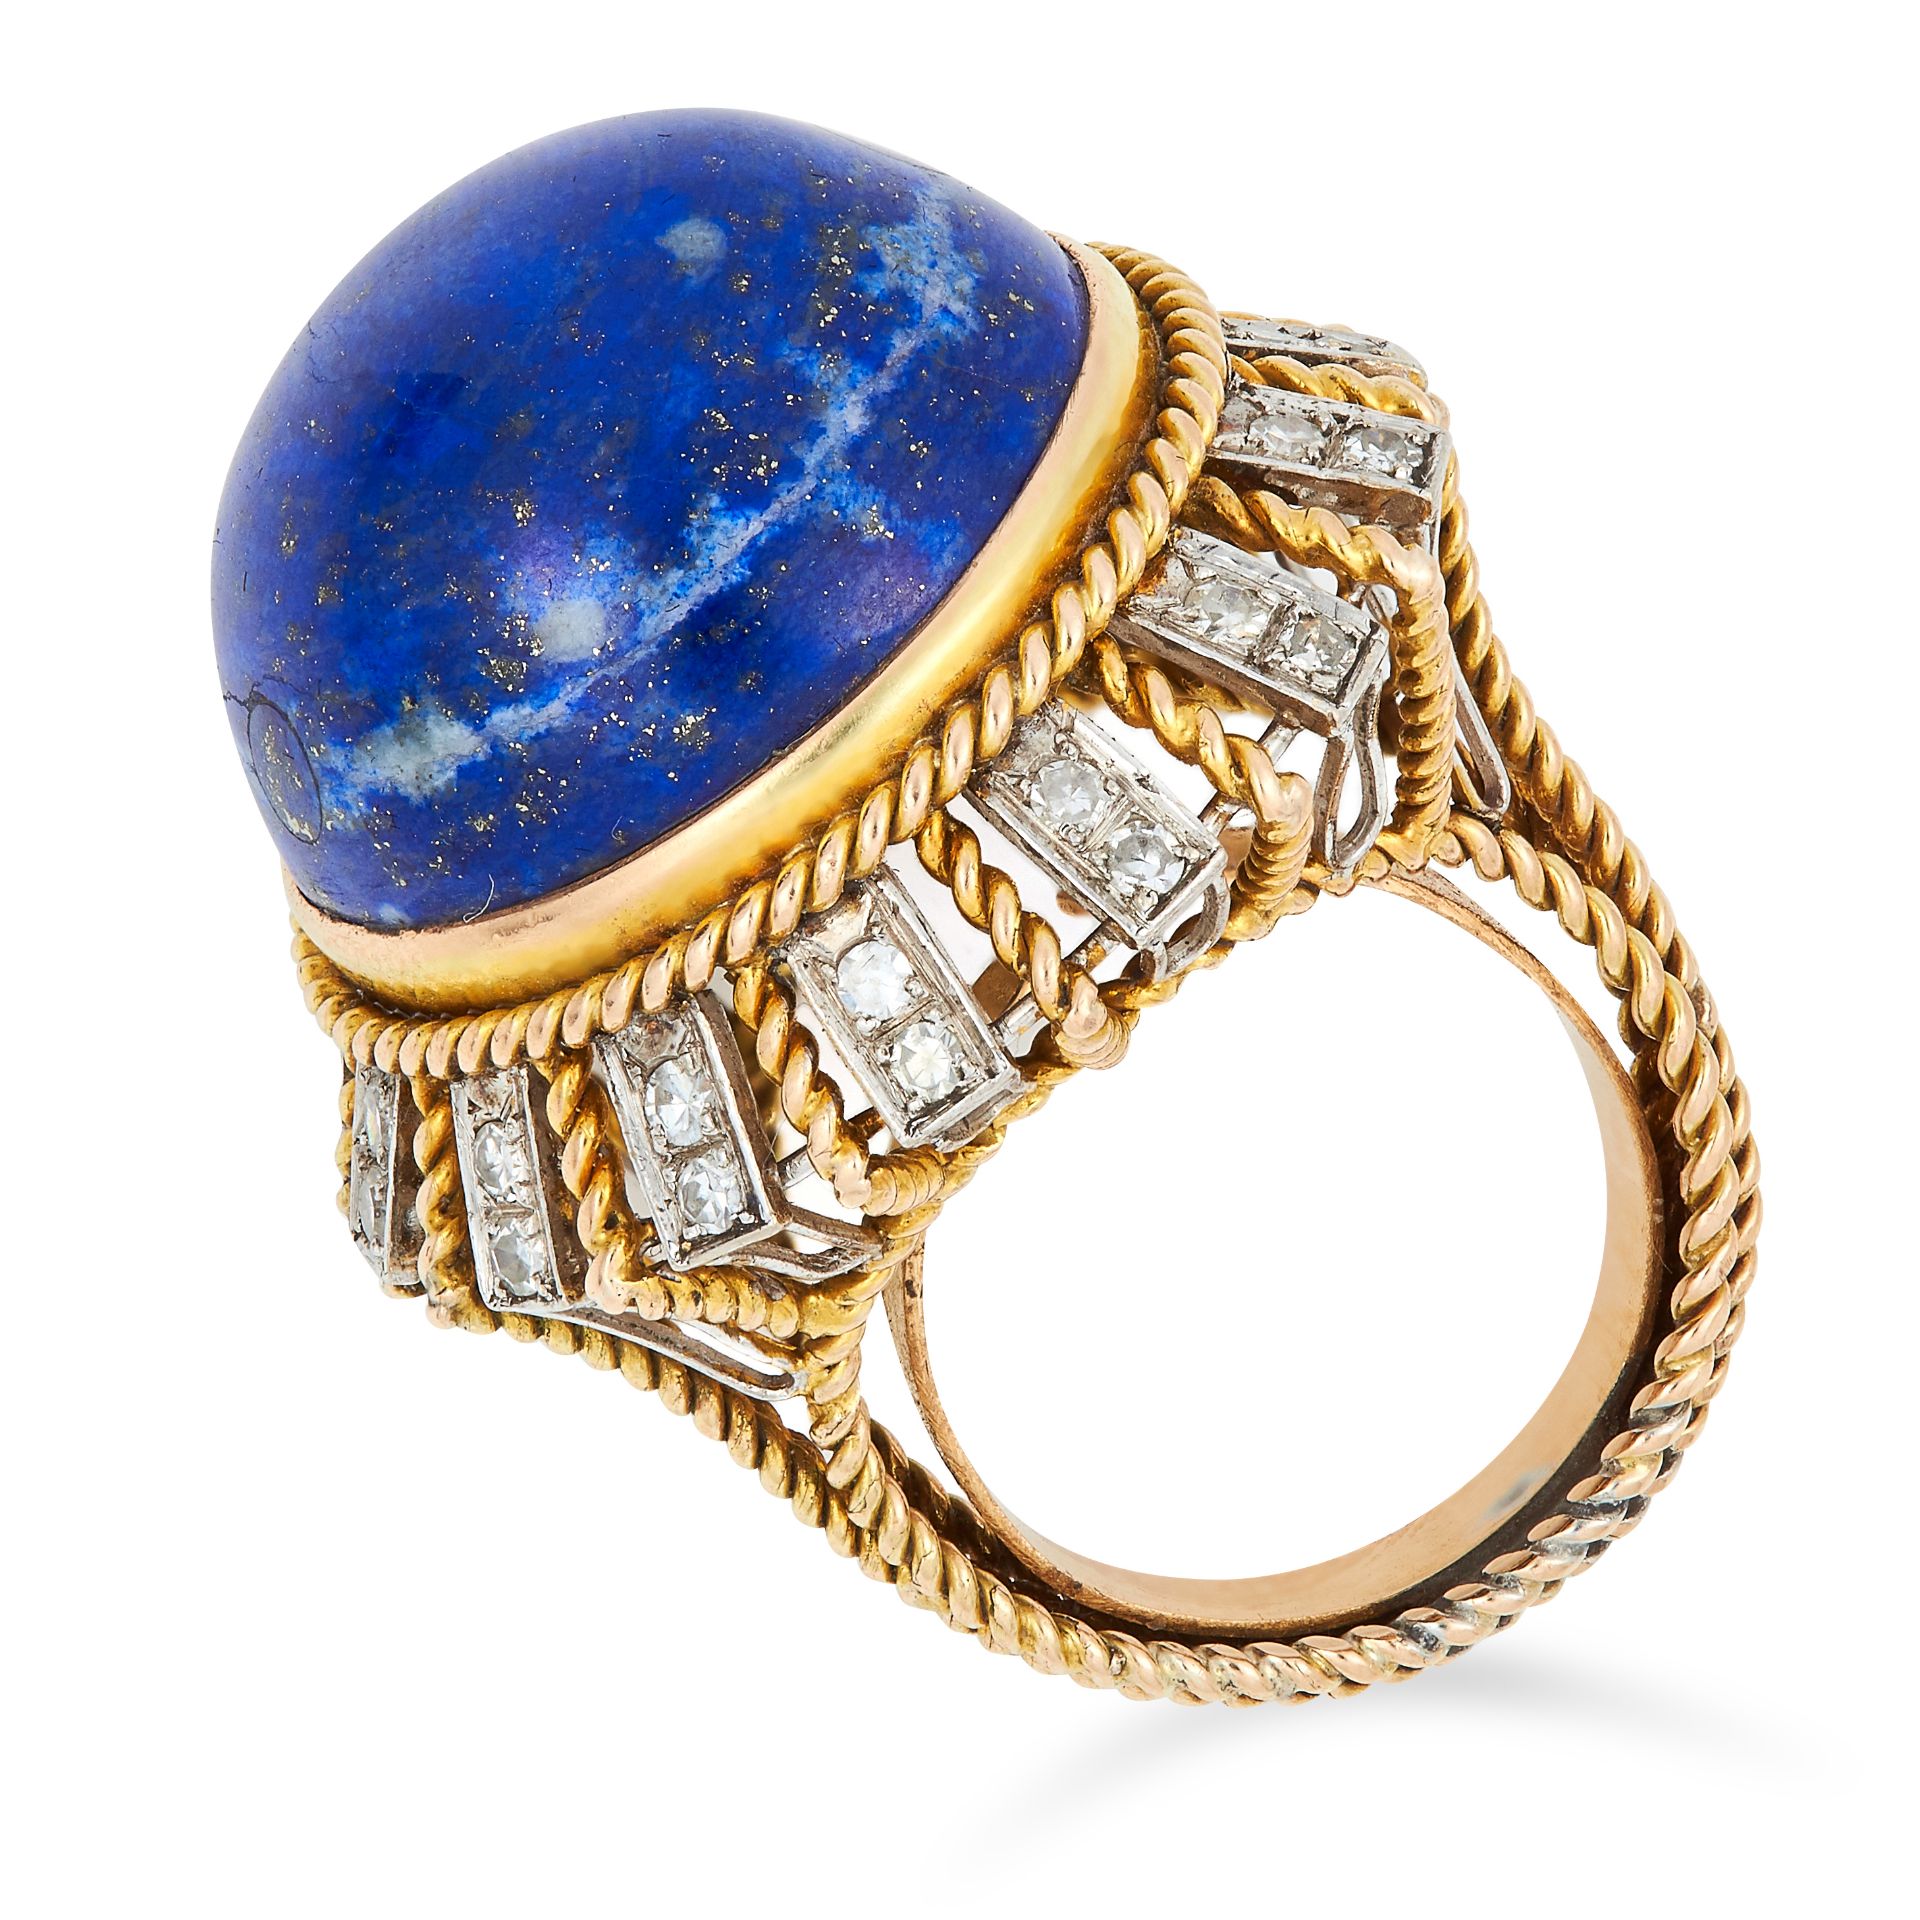 VINTAGE LAPIS LAZULI AND DIAMOND RING set with a circular lapis lazuli cabochon of 29.69 carats - Image 2 of 2